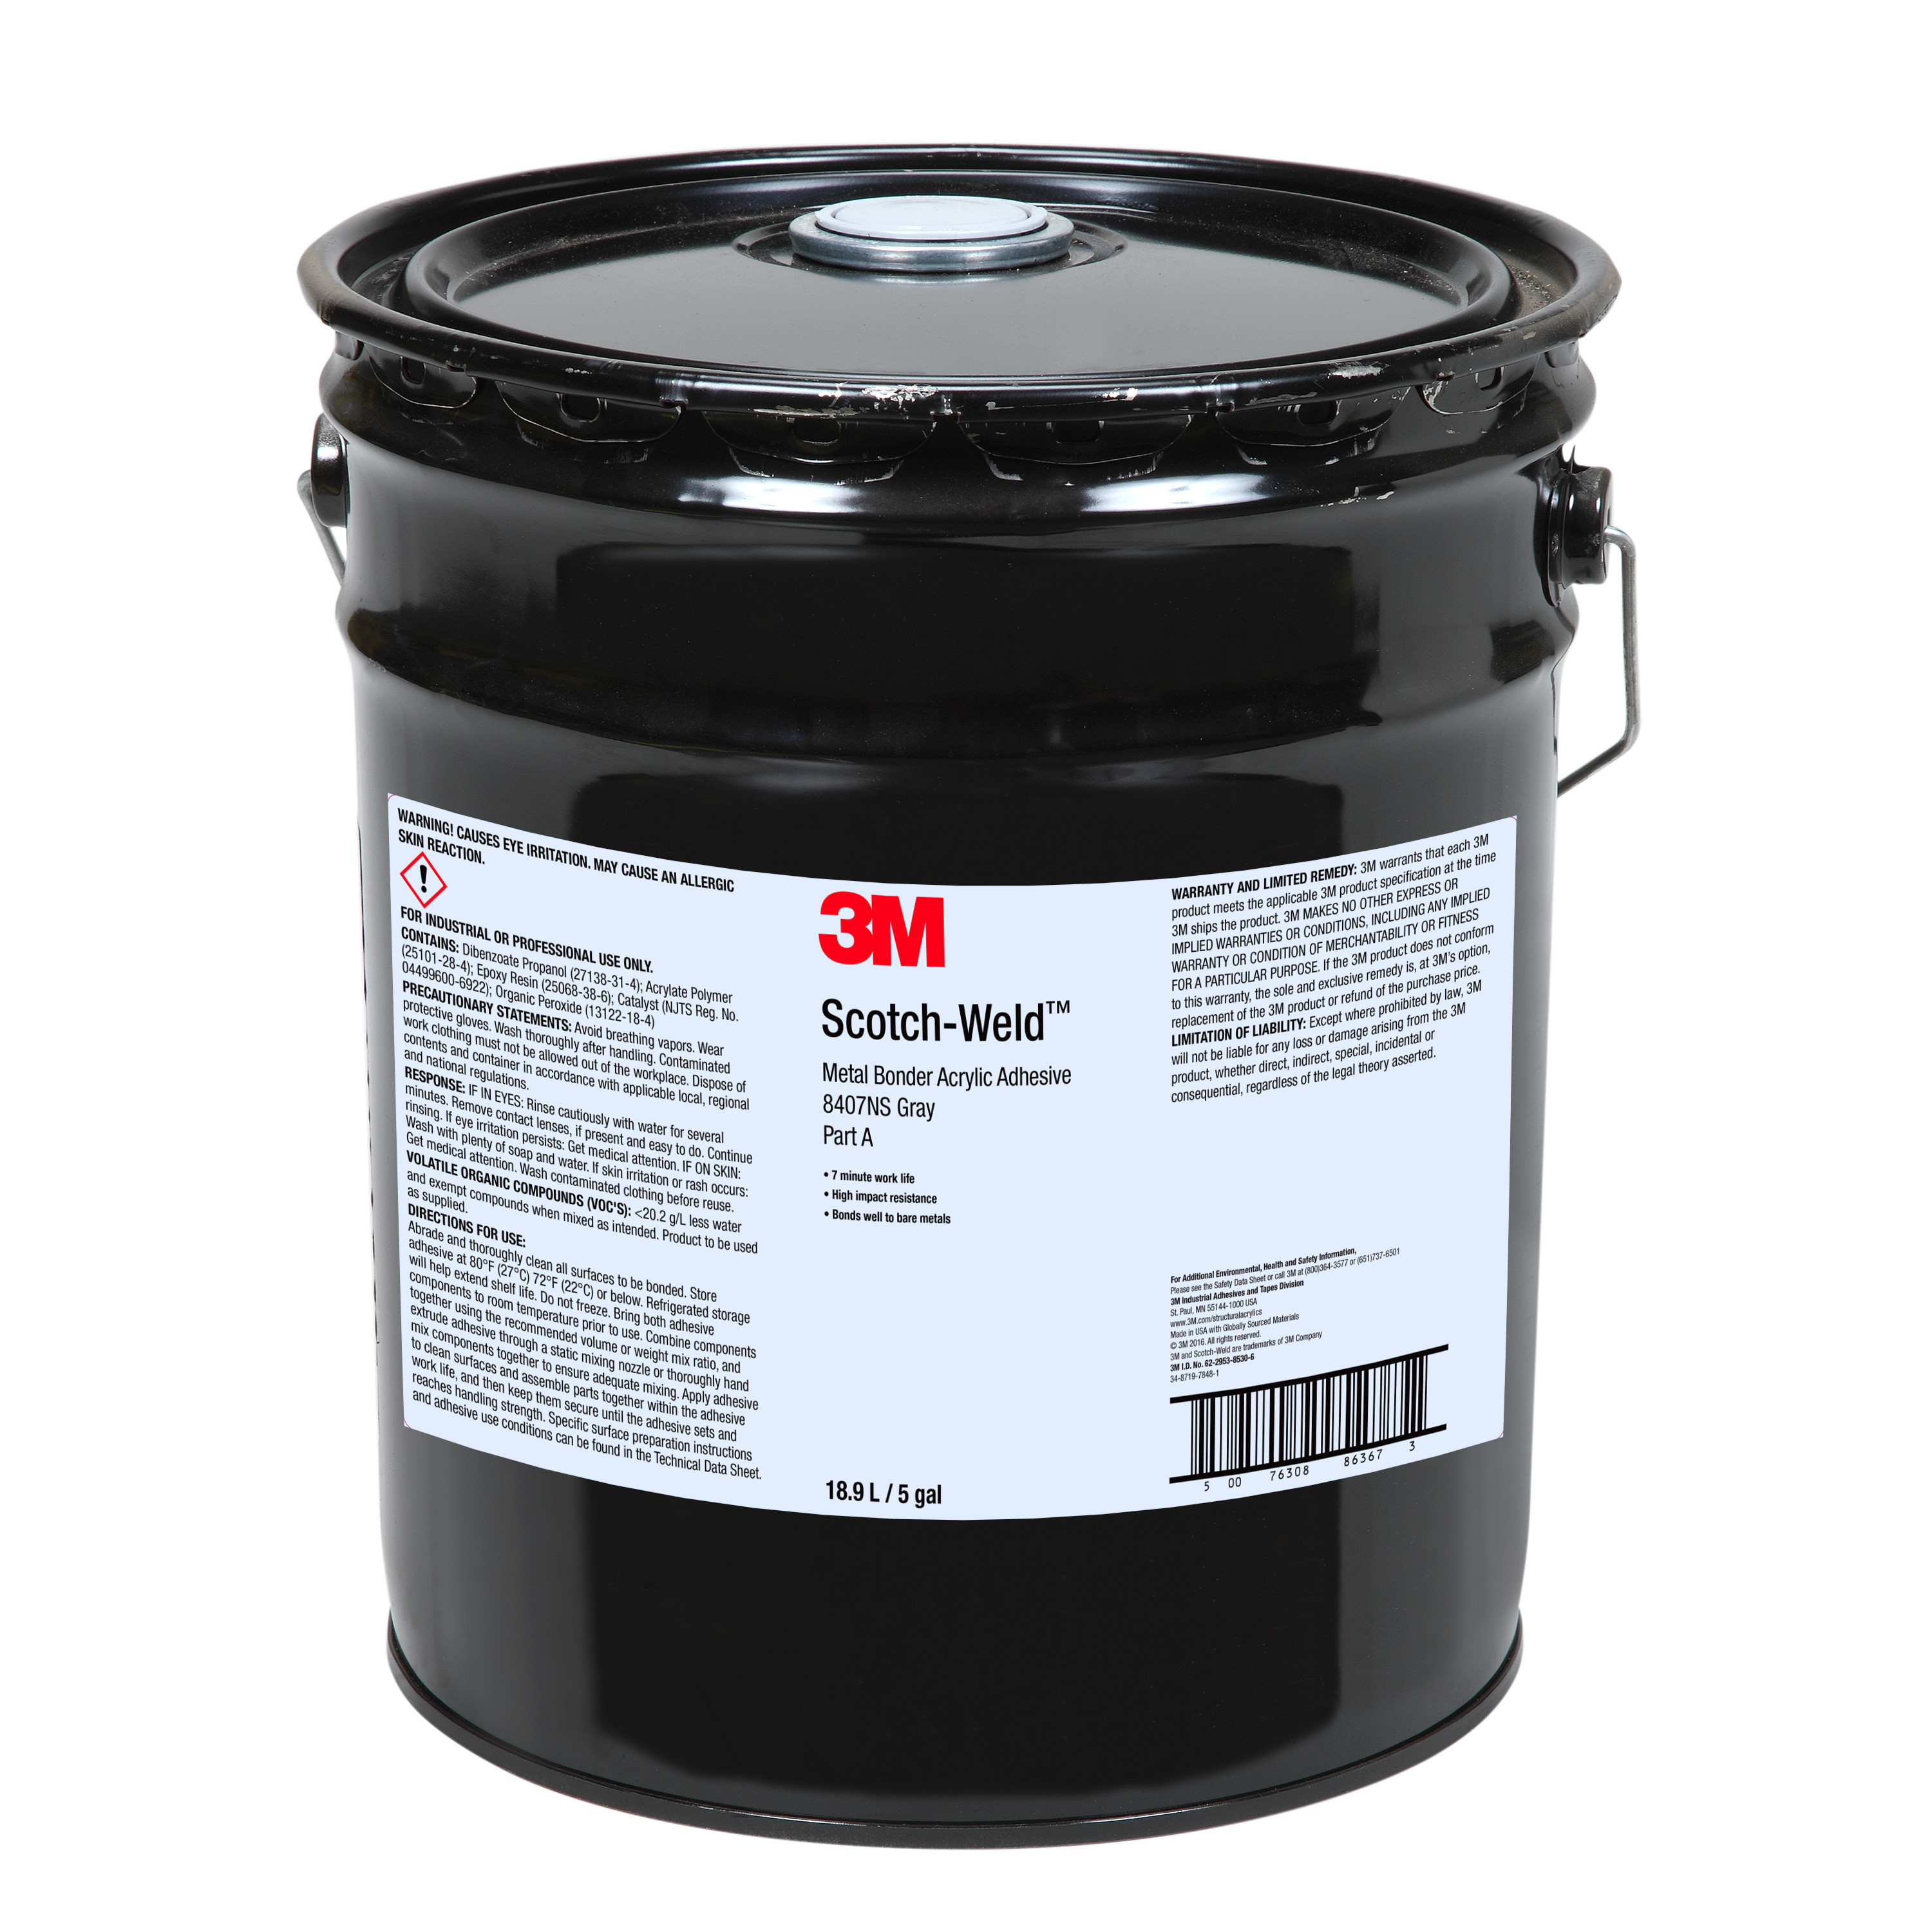 SKU 7100105384 | 3M™ Scotch-Weld™ Metal Bonder Acrylic Adhesive 8407NS